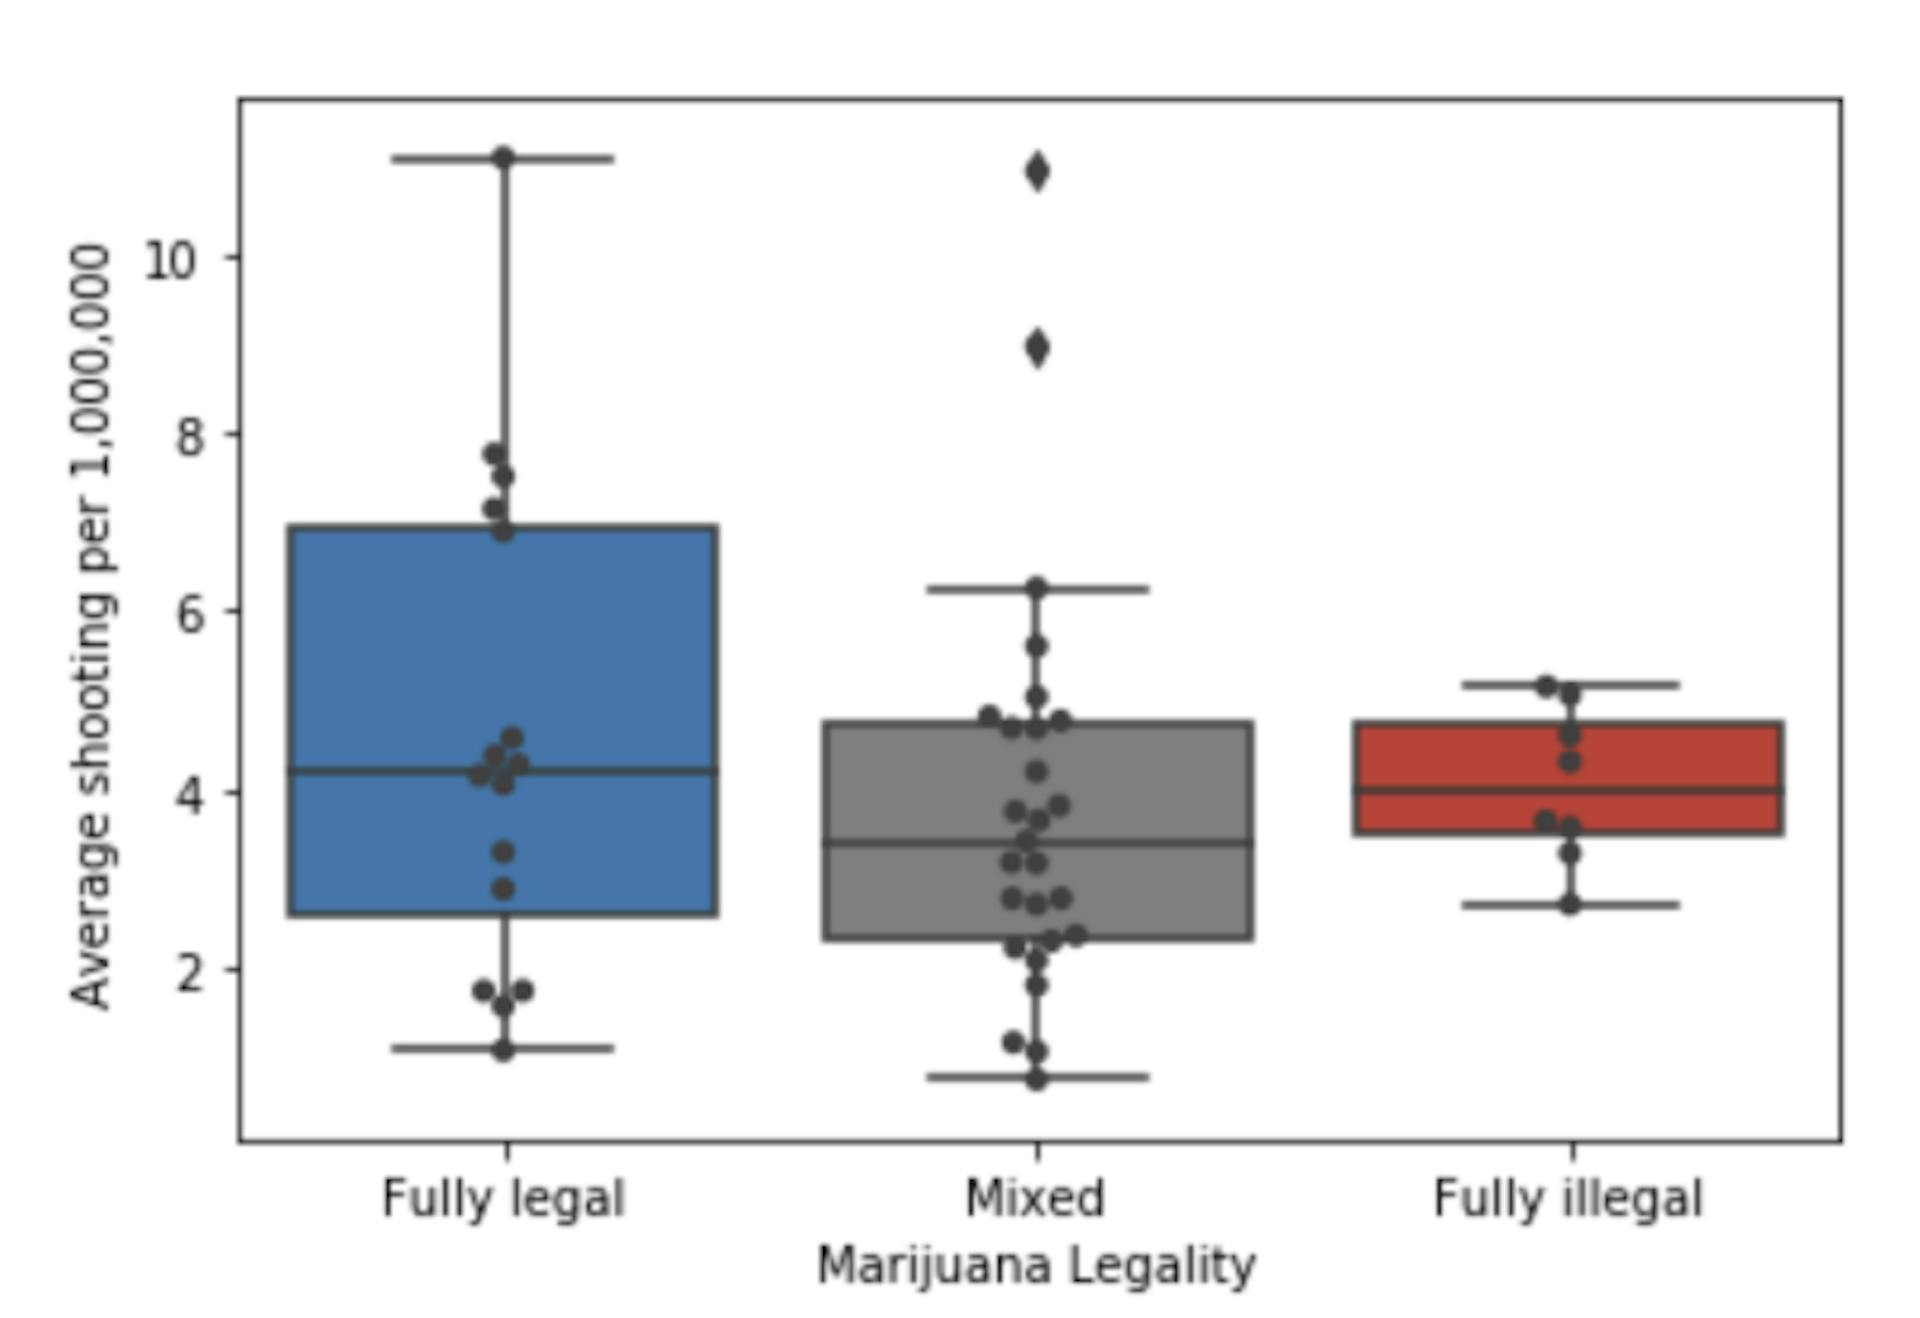 Figure 18. Boxplot of fatal police shooting among different marijuana legality states